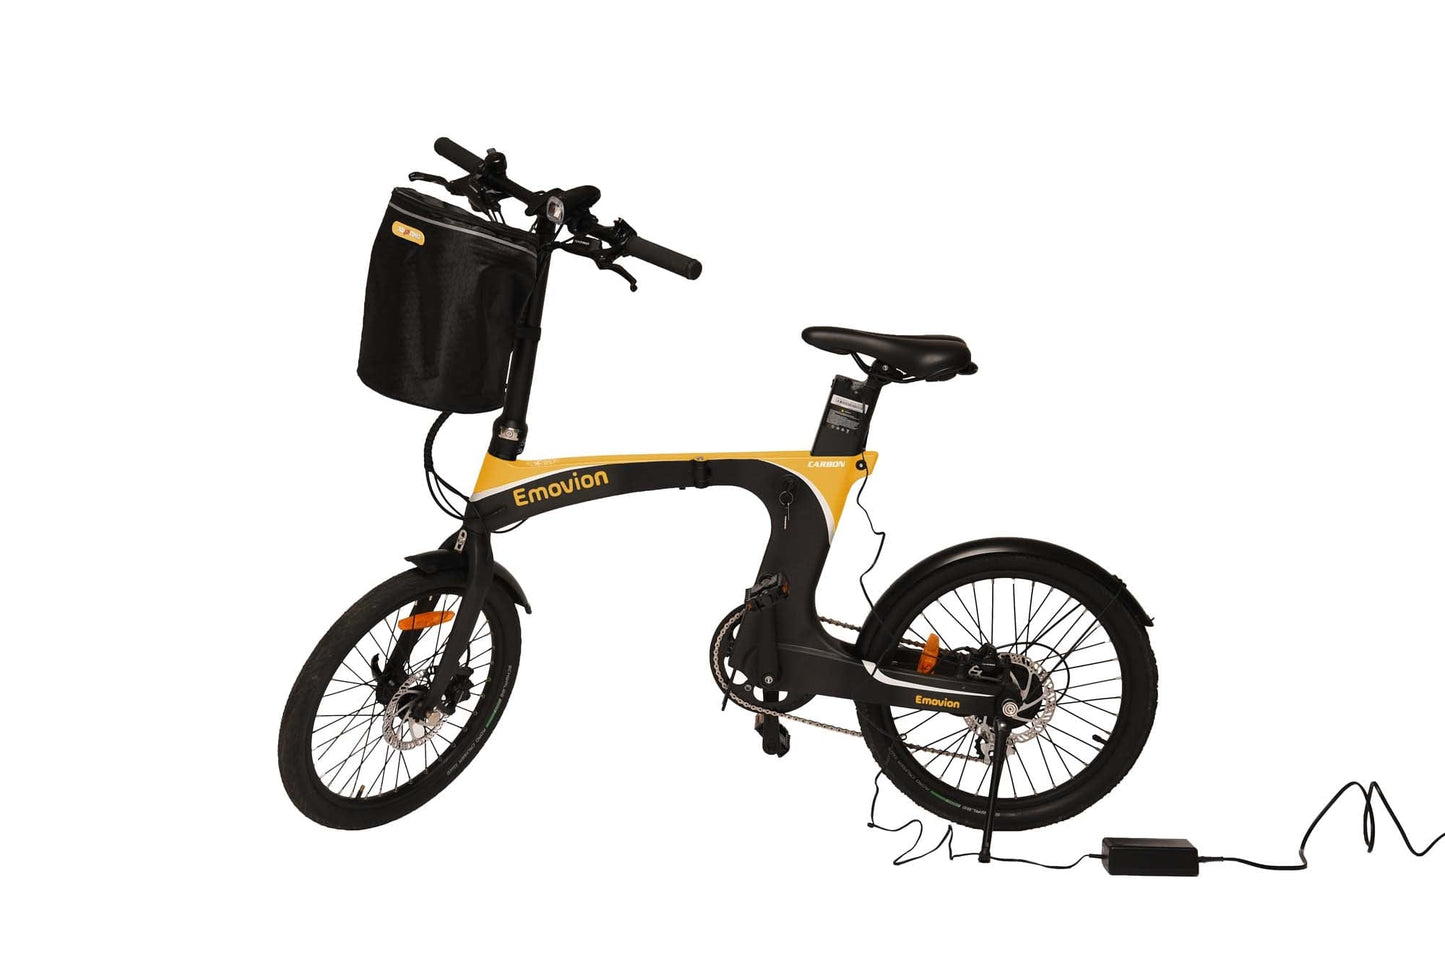 Lifty - leichtestes, faltbares Carbon E-Bike gelb